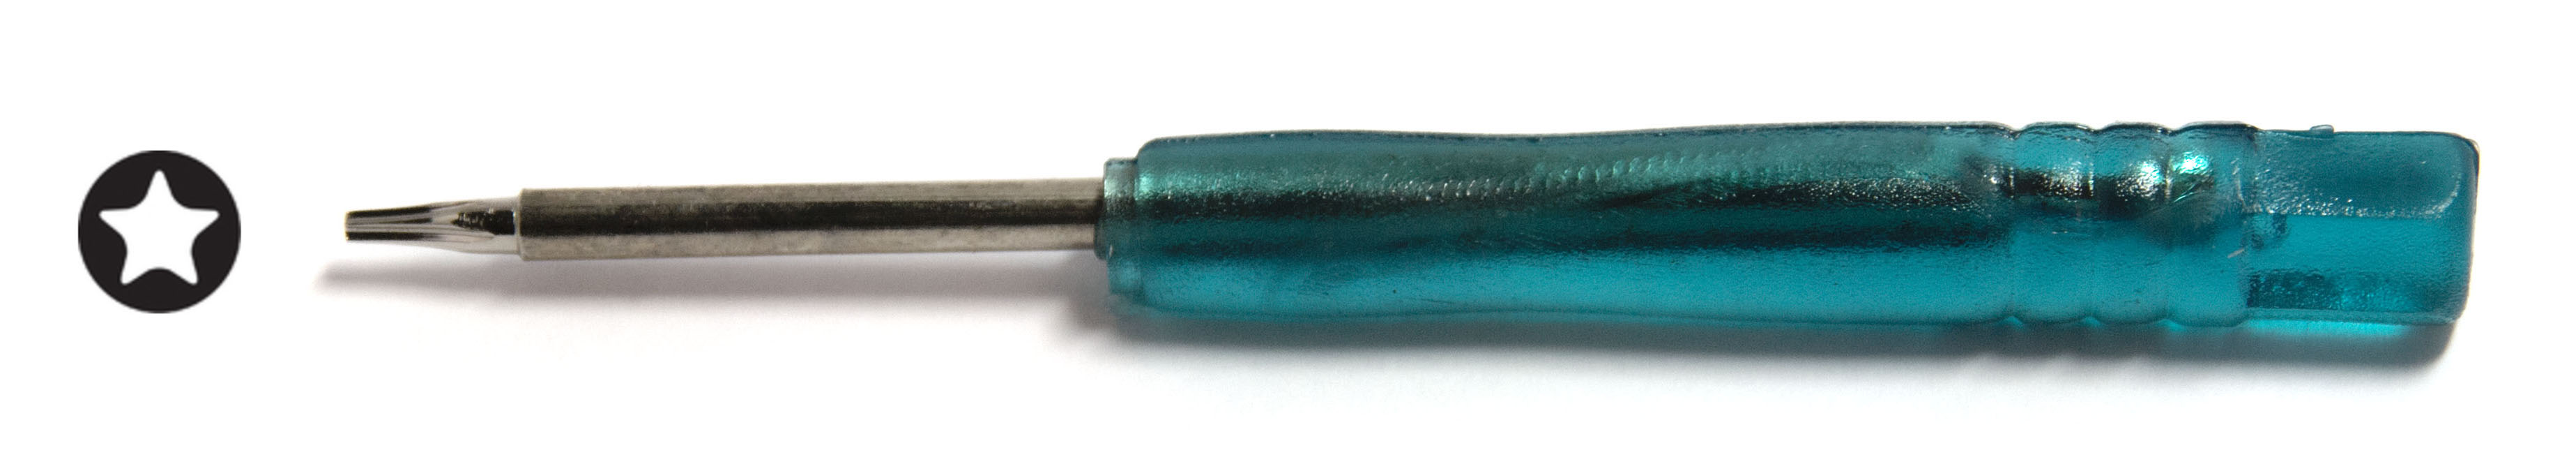 P1.2 Pentalobe screwdriver